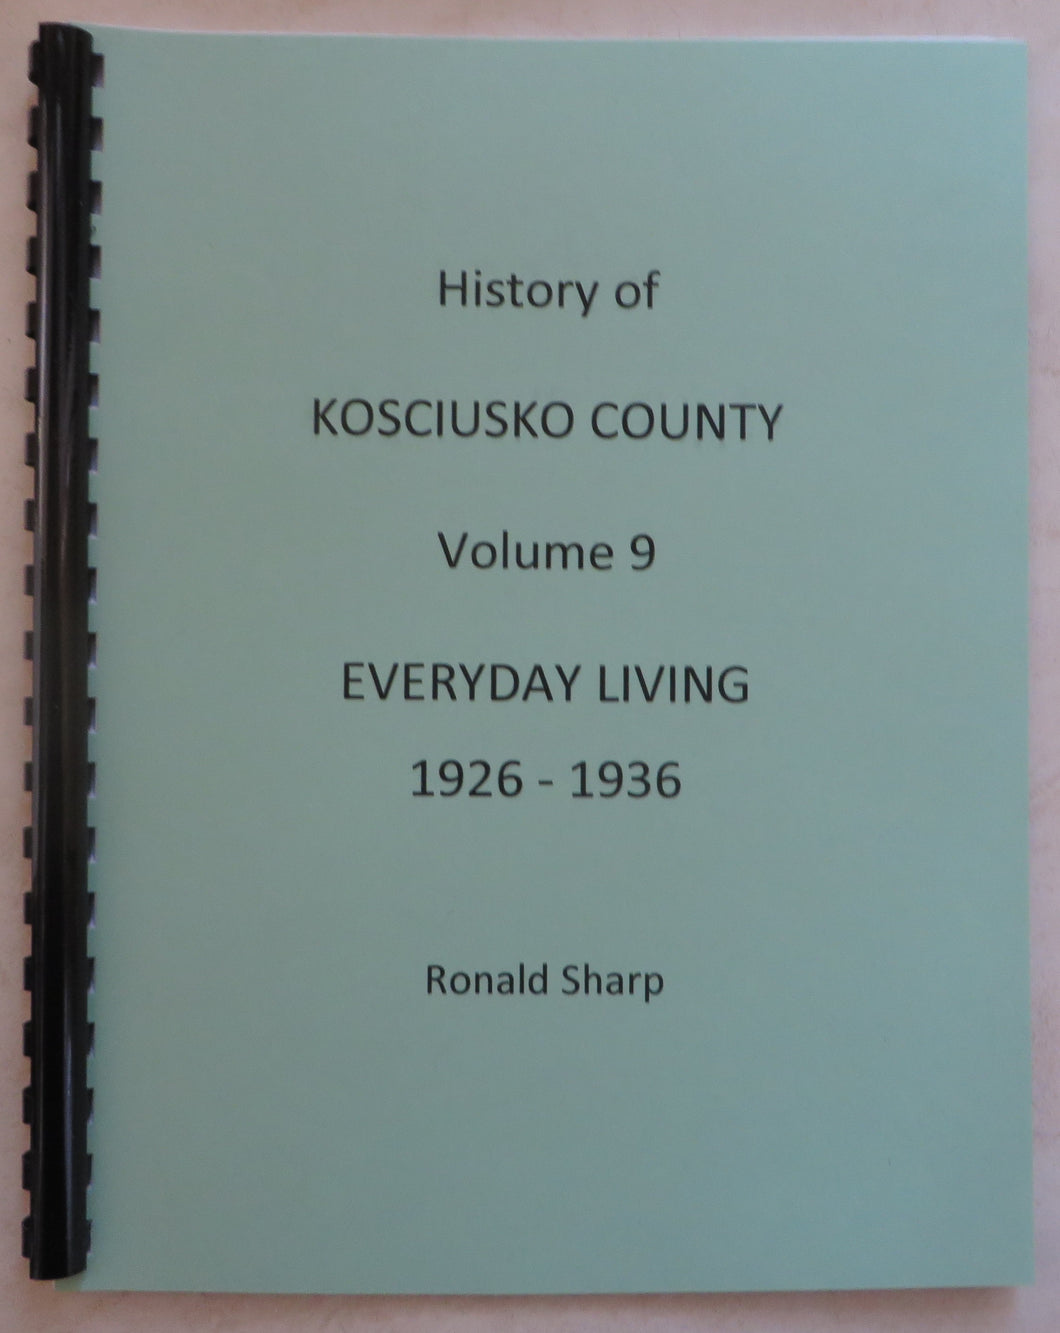 History of Kosciusko County, Volume 9, Everyday Living, 1926-1936